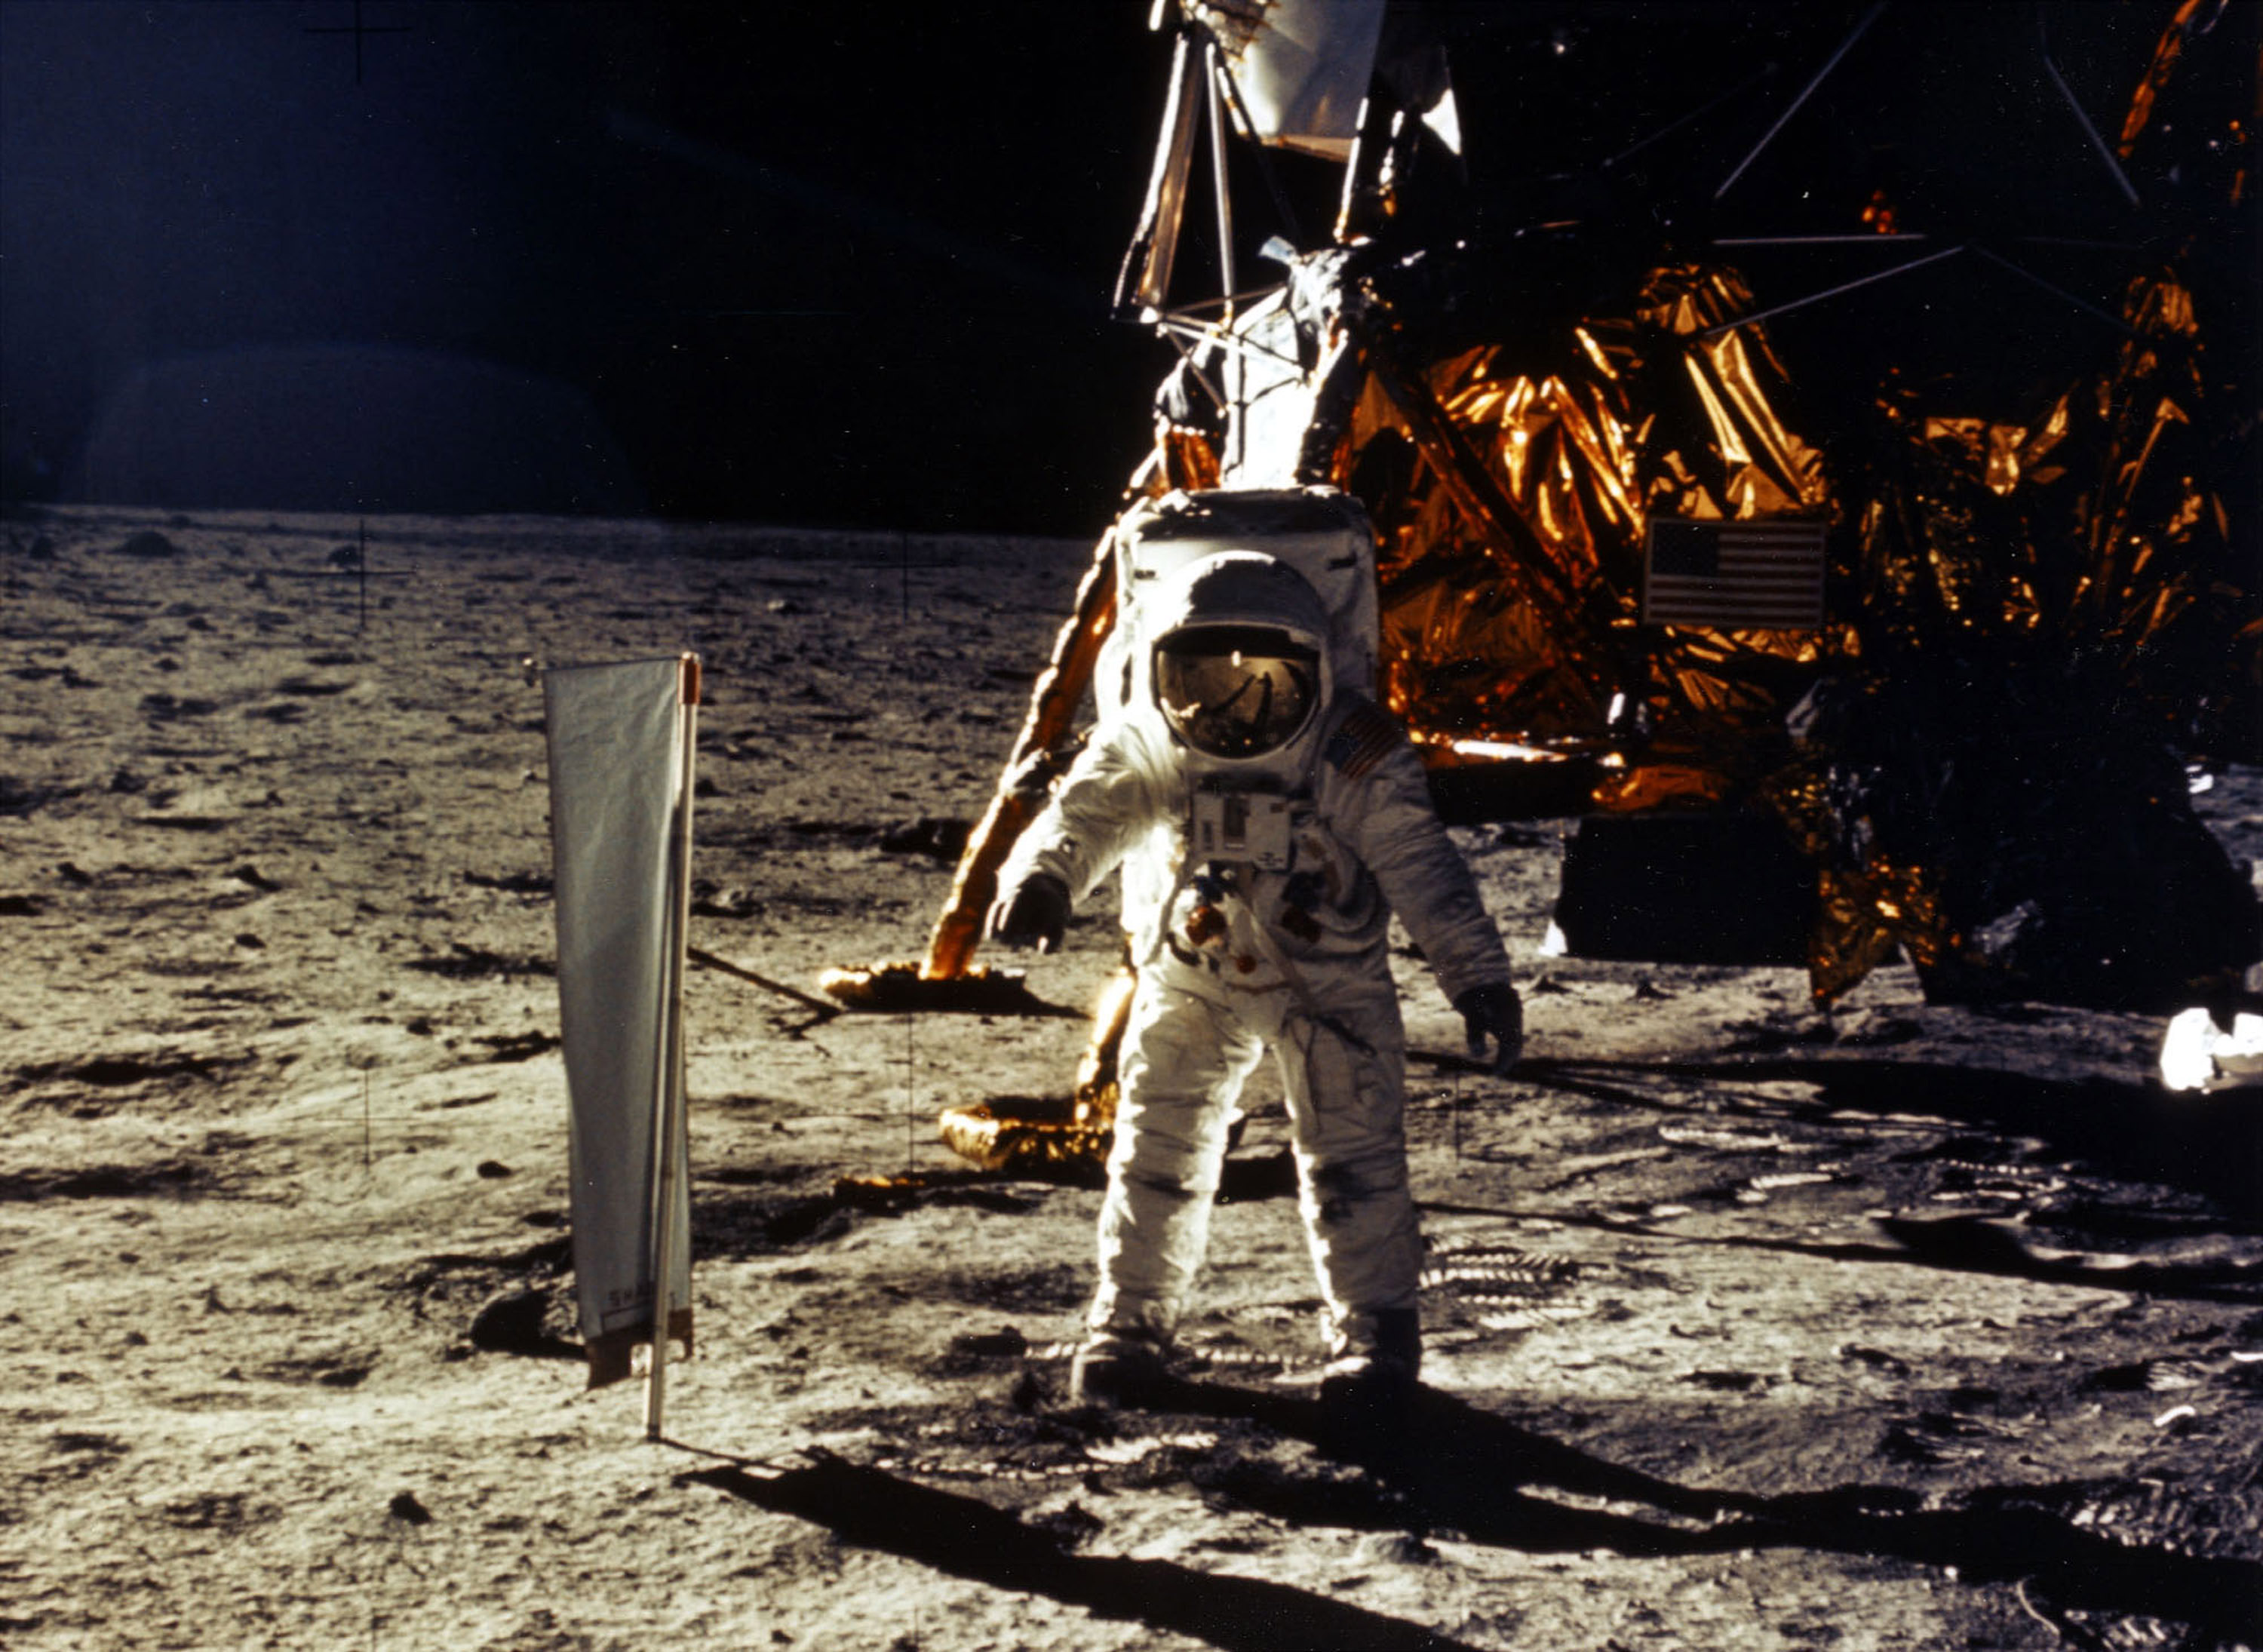 Walking on the moon. Apollo 11 1969.